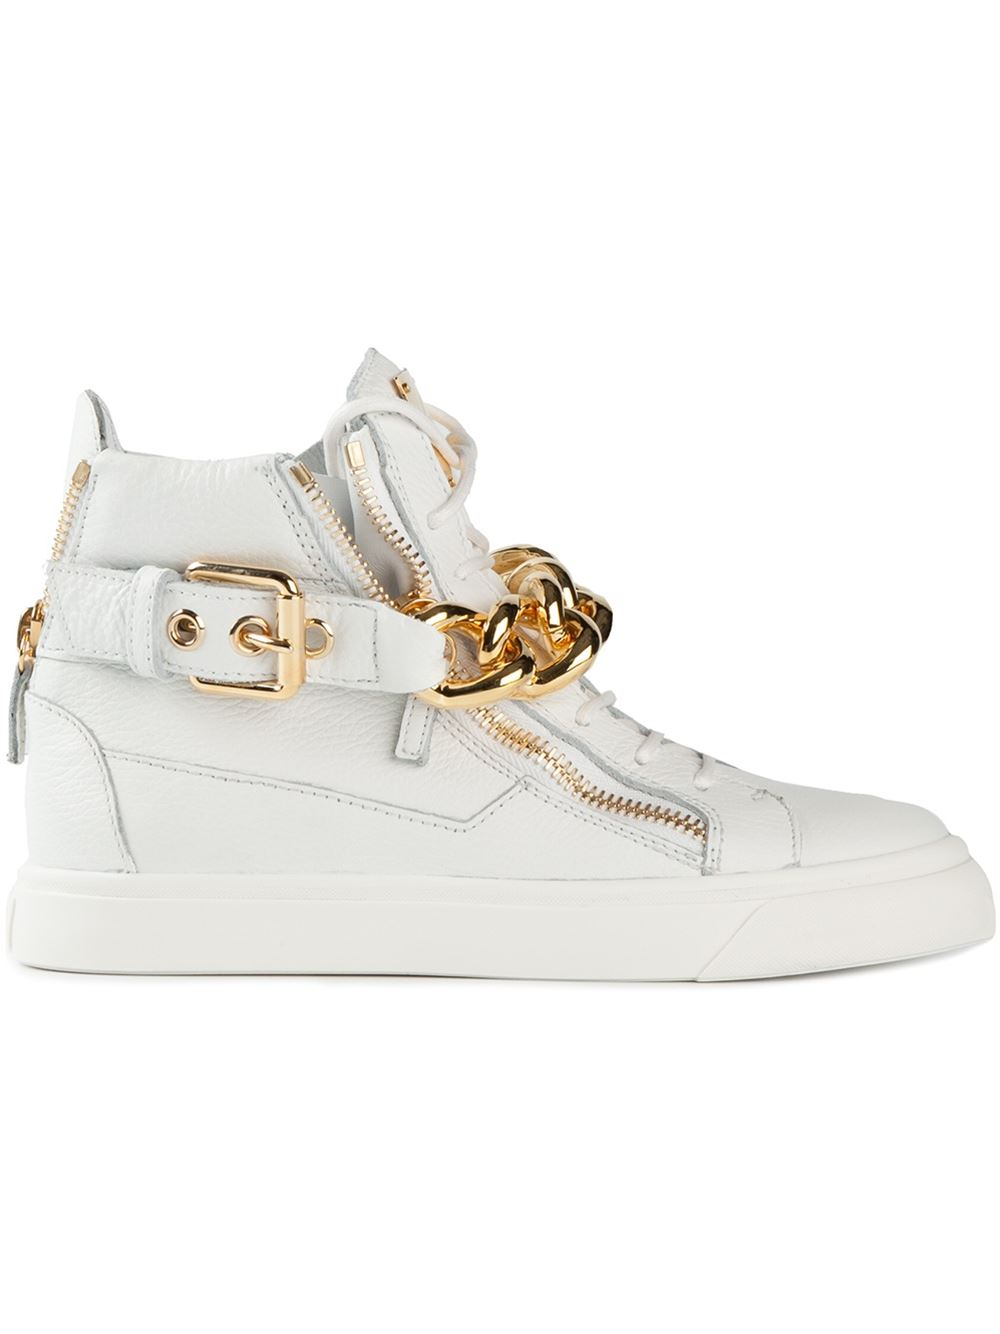 Giuseppe Zanotti Gold Chain Sneakers in White Lyst